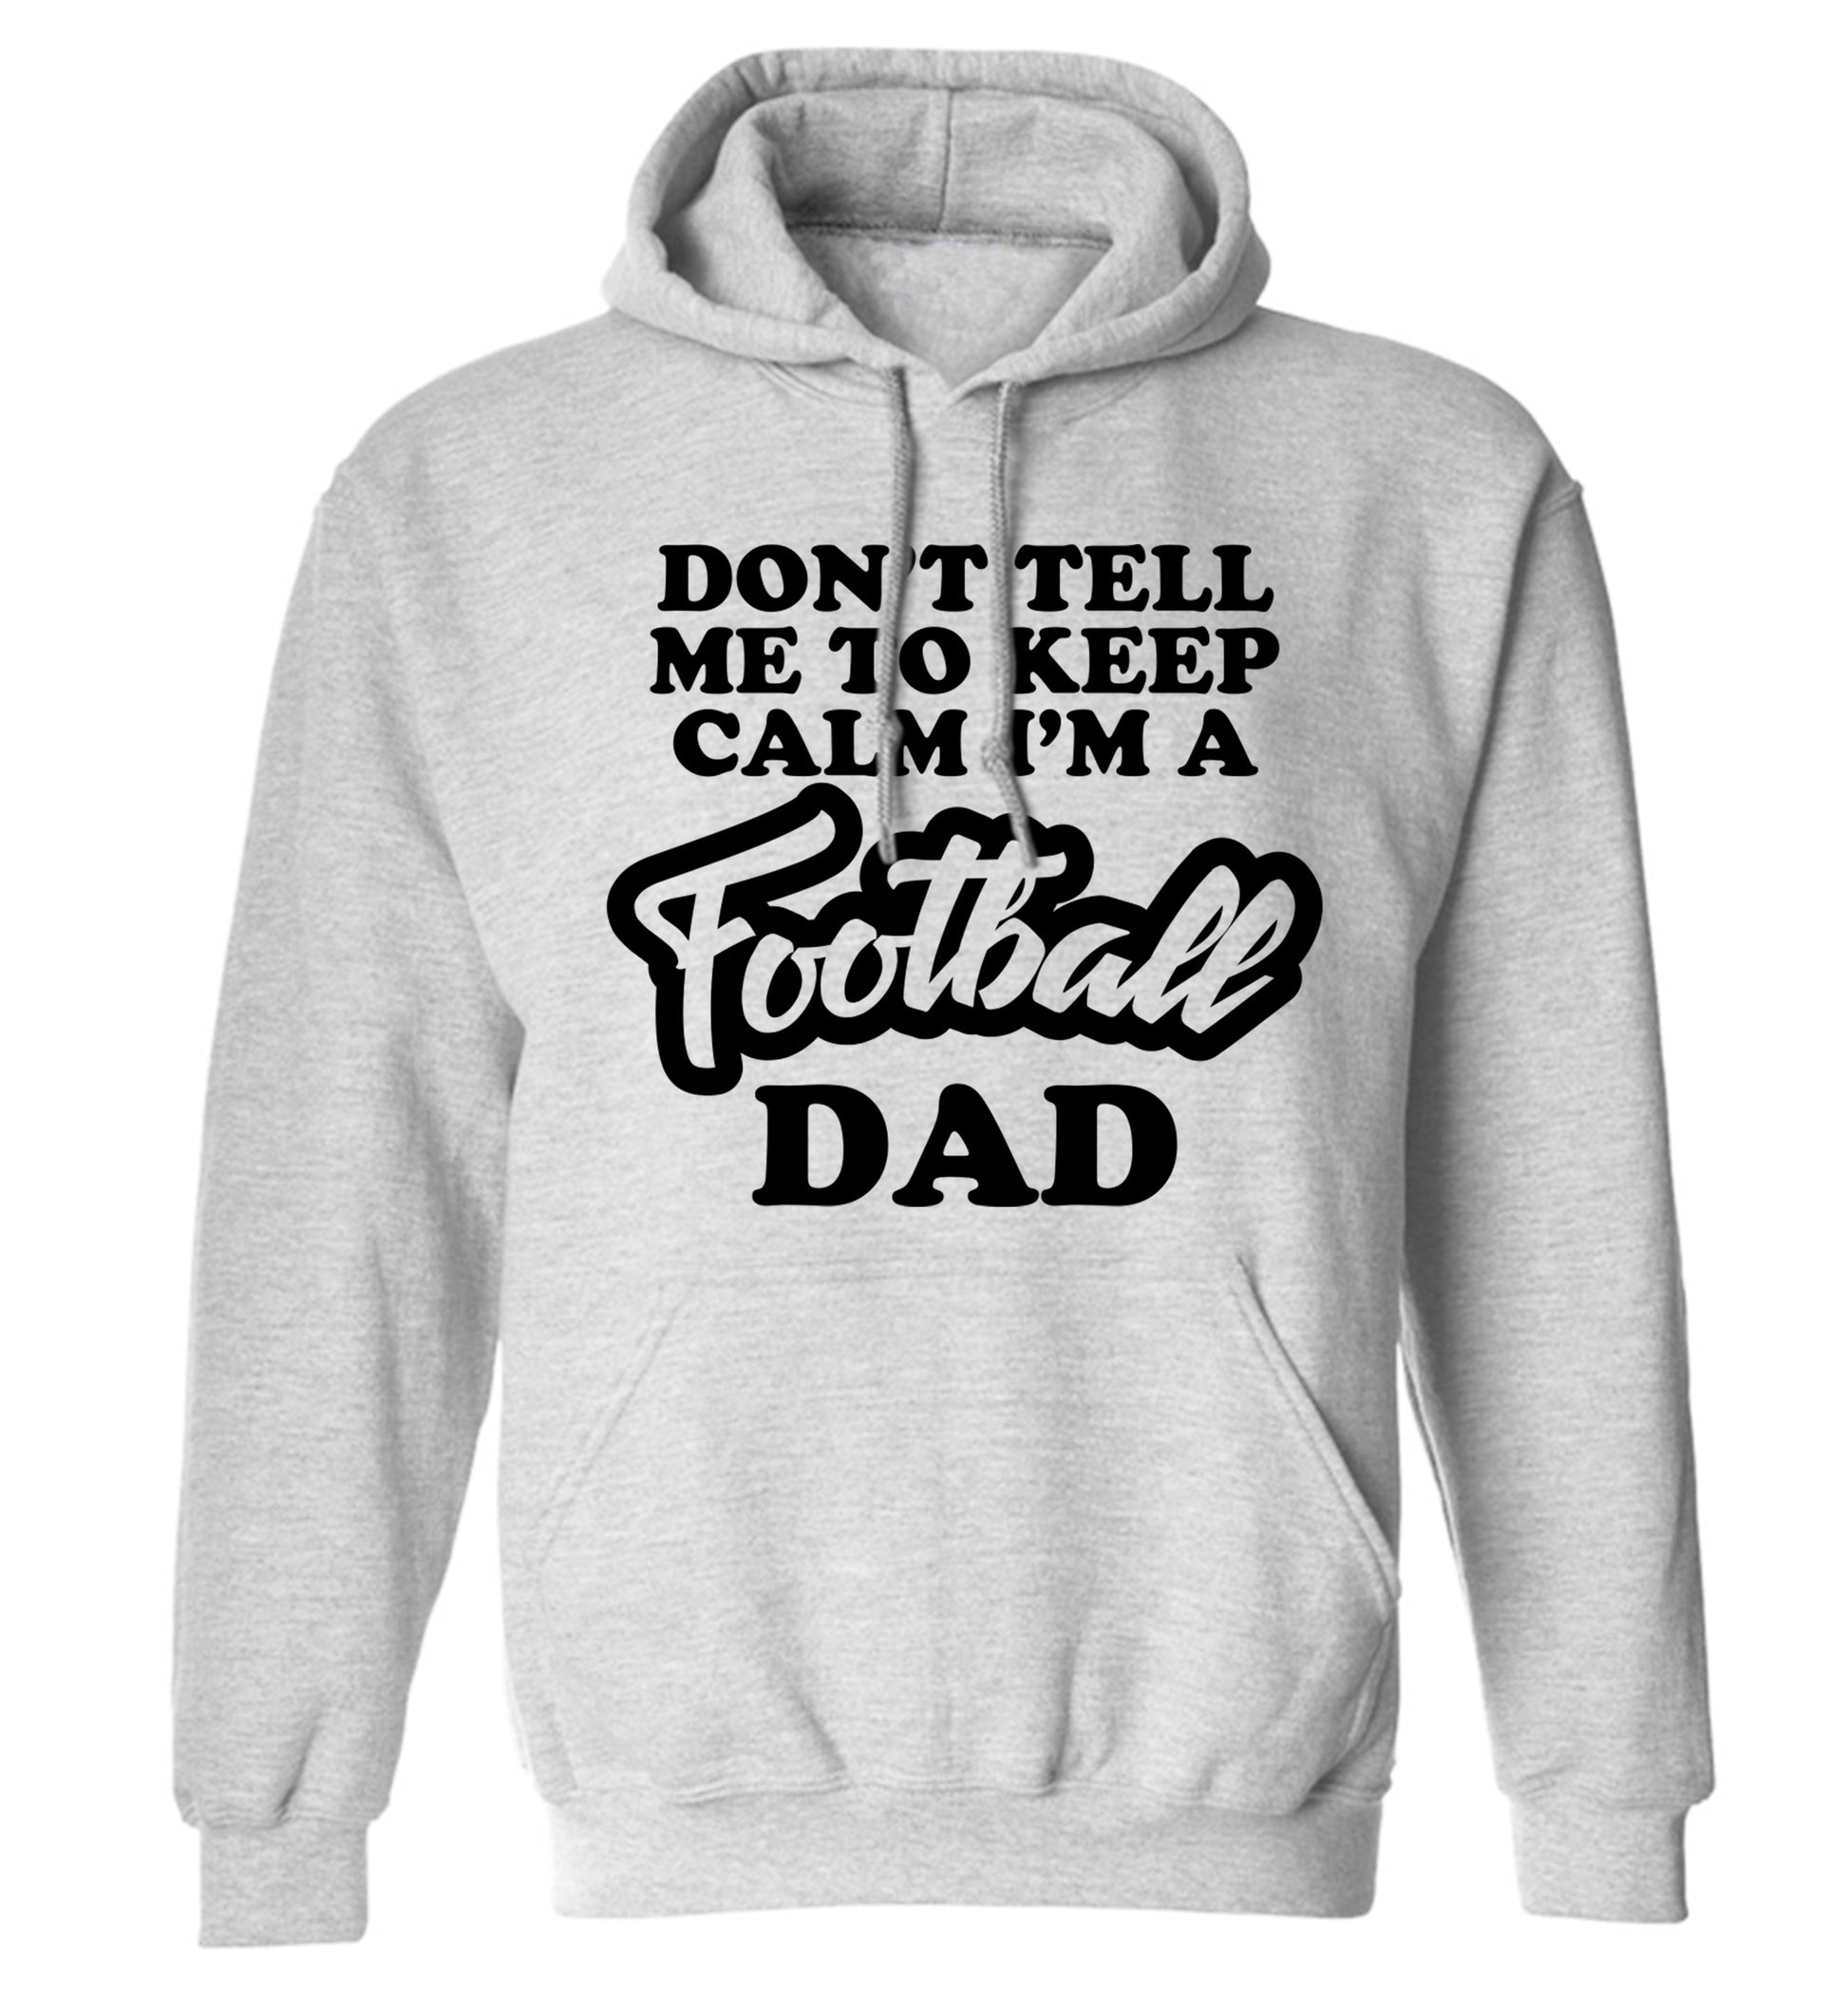 Don't tell me to keep calm I'm a football grandad adults unisexgrey hoodie 2XL